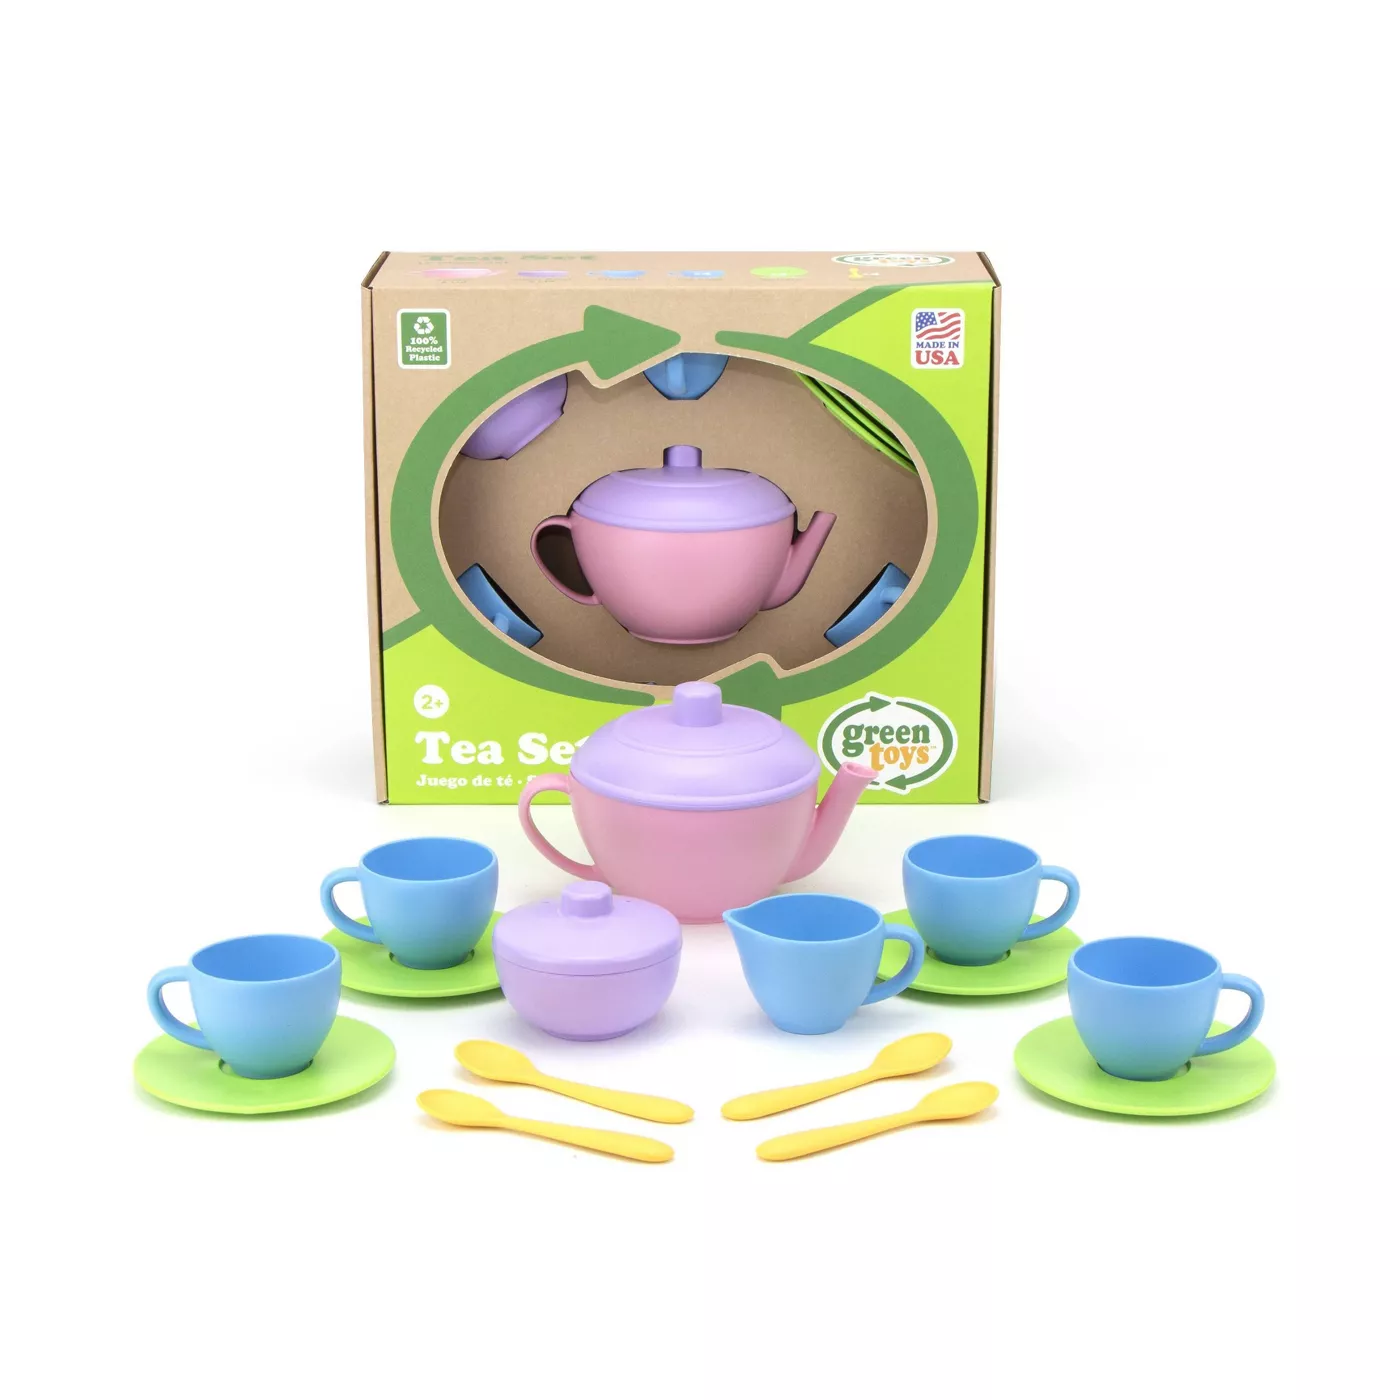 Green Toys Tea Set - image 2 of 5